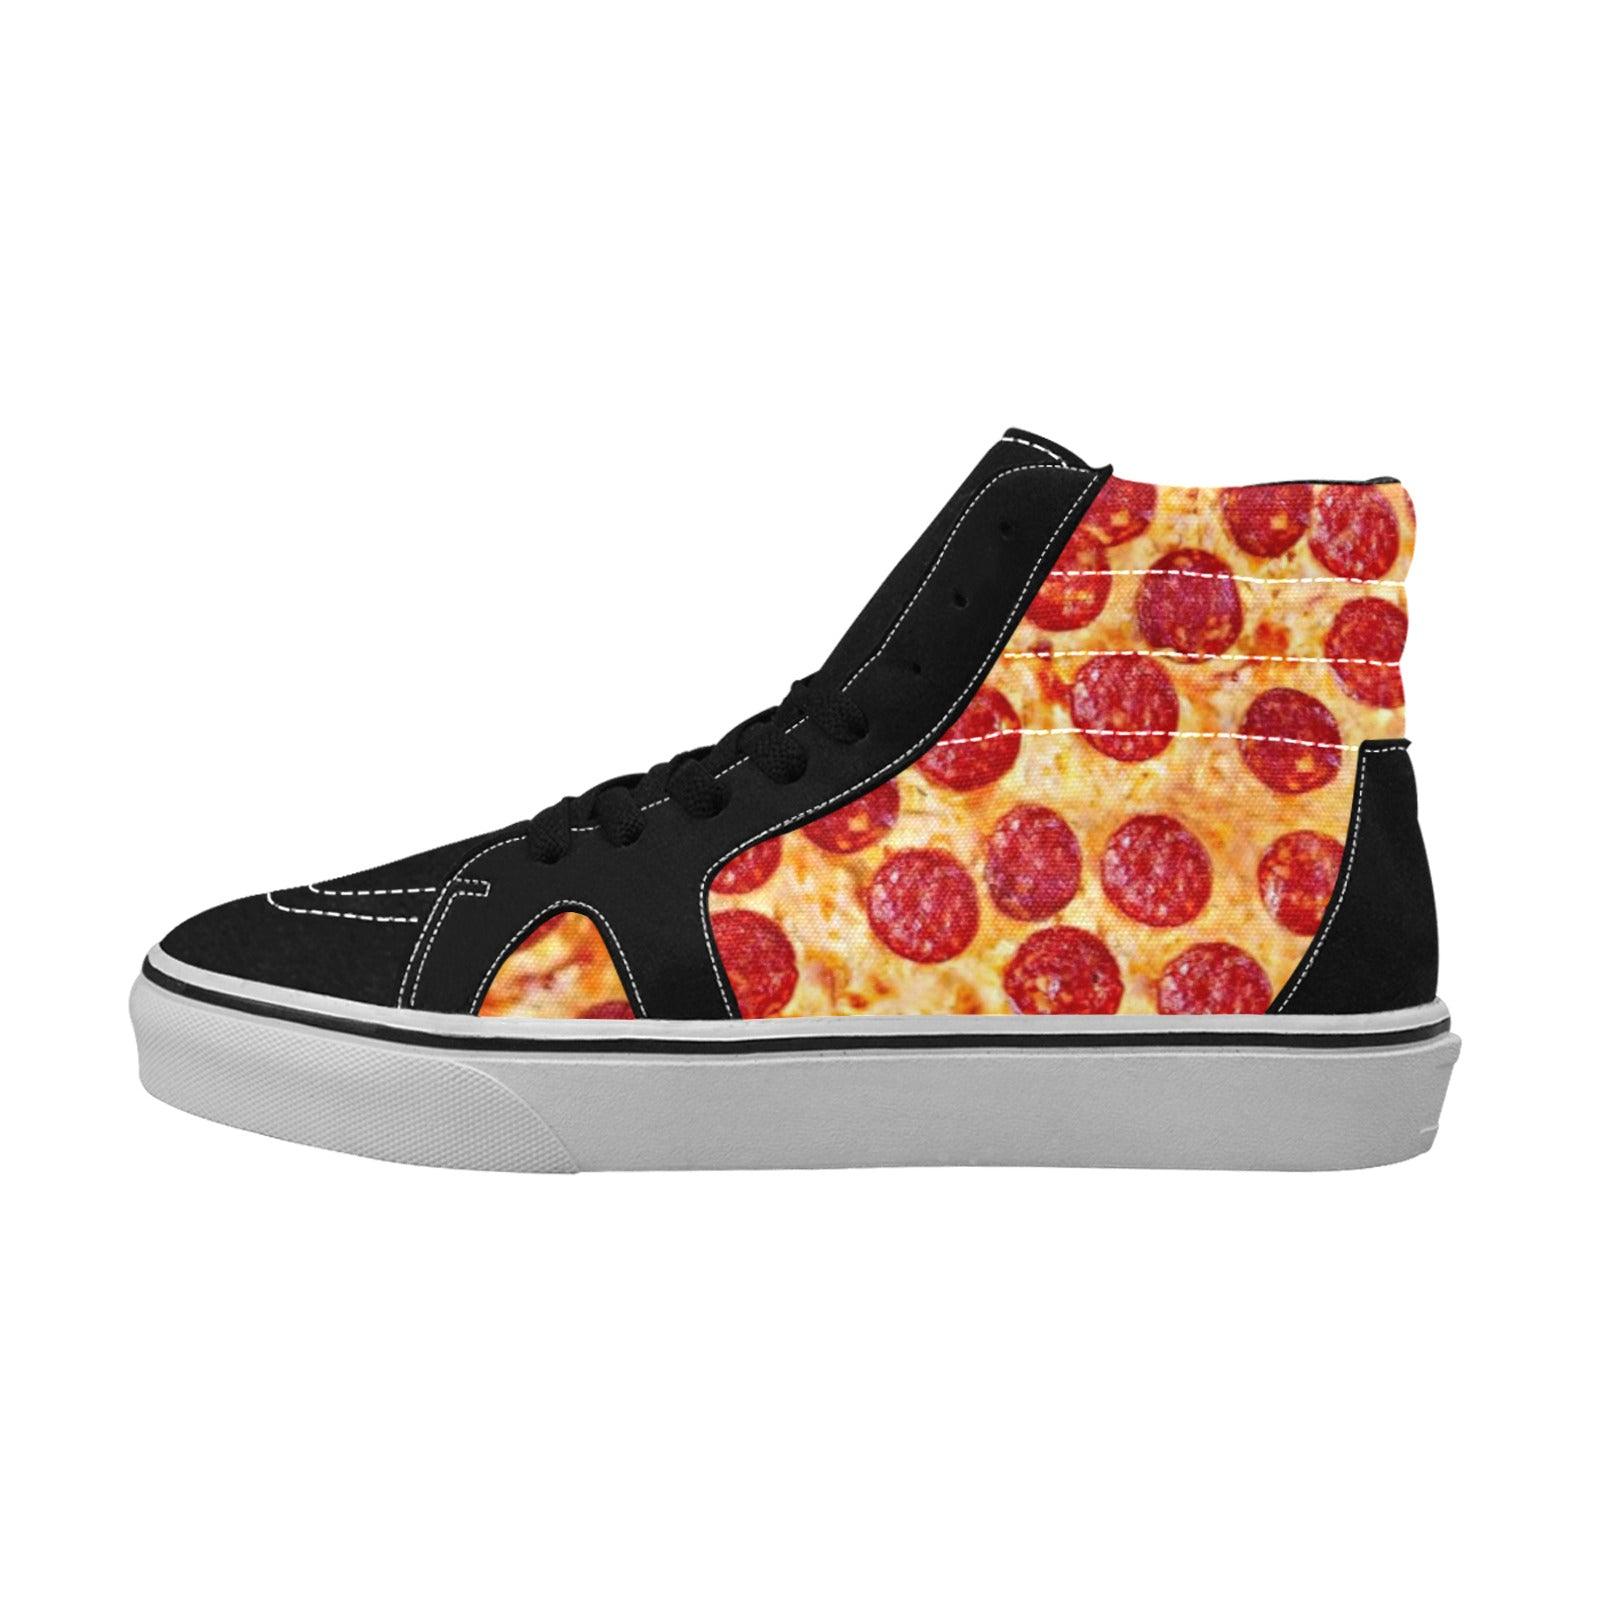 Pepperoni Pizza Men - Freaky Shoes®